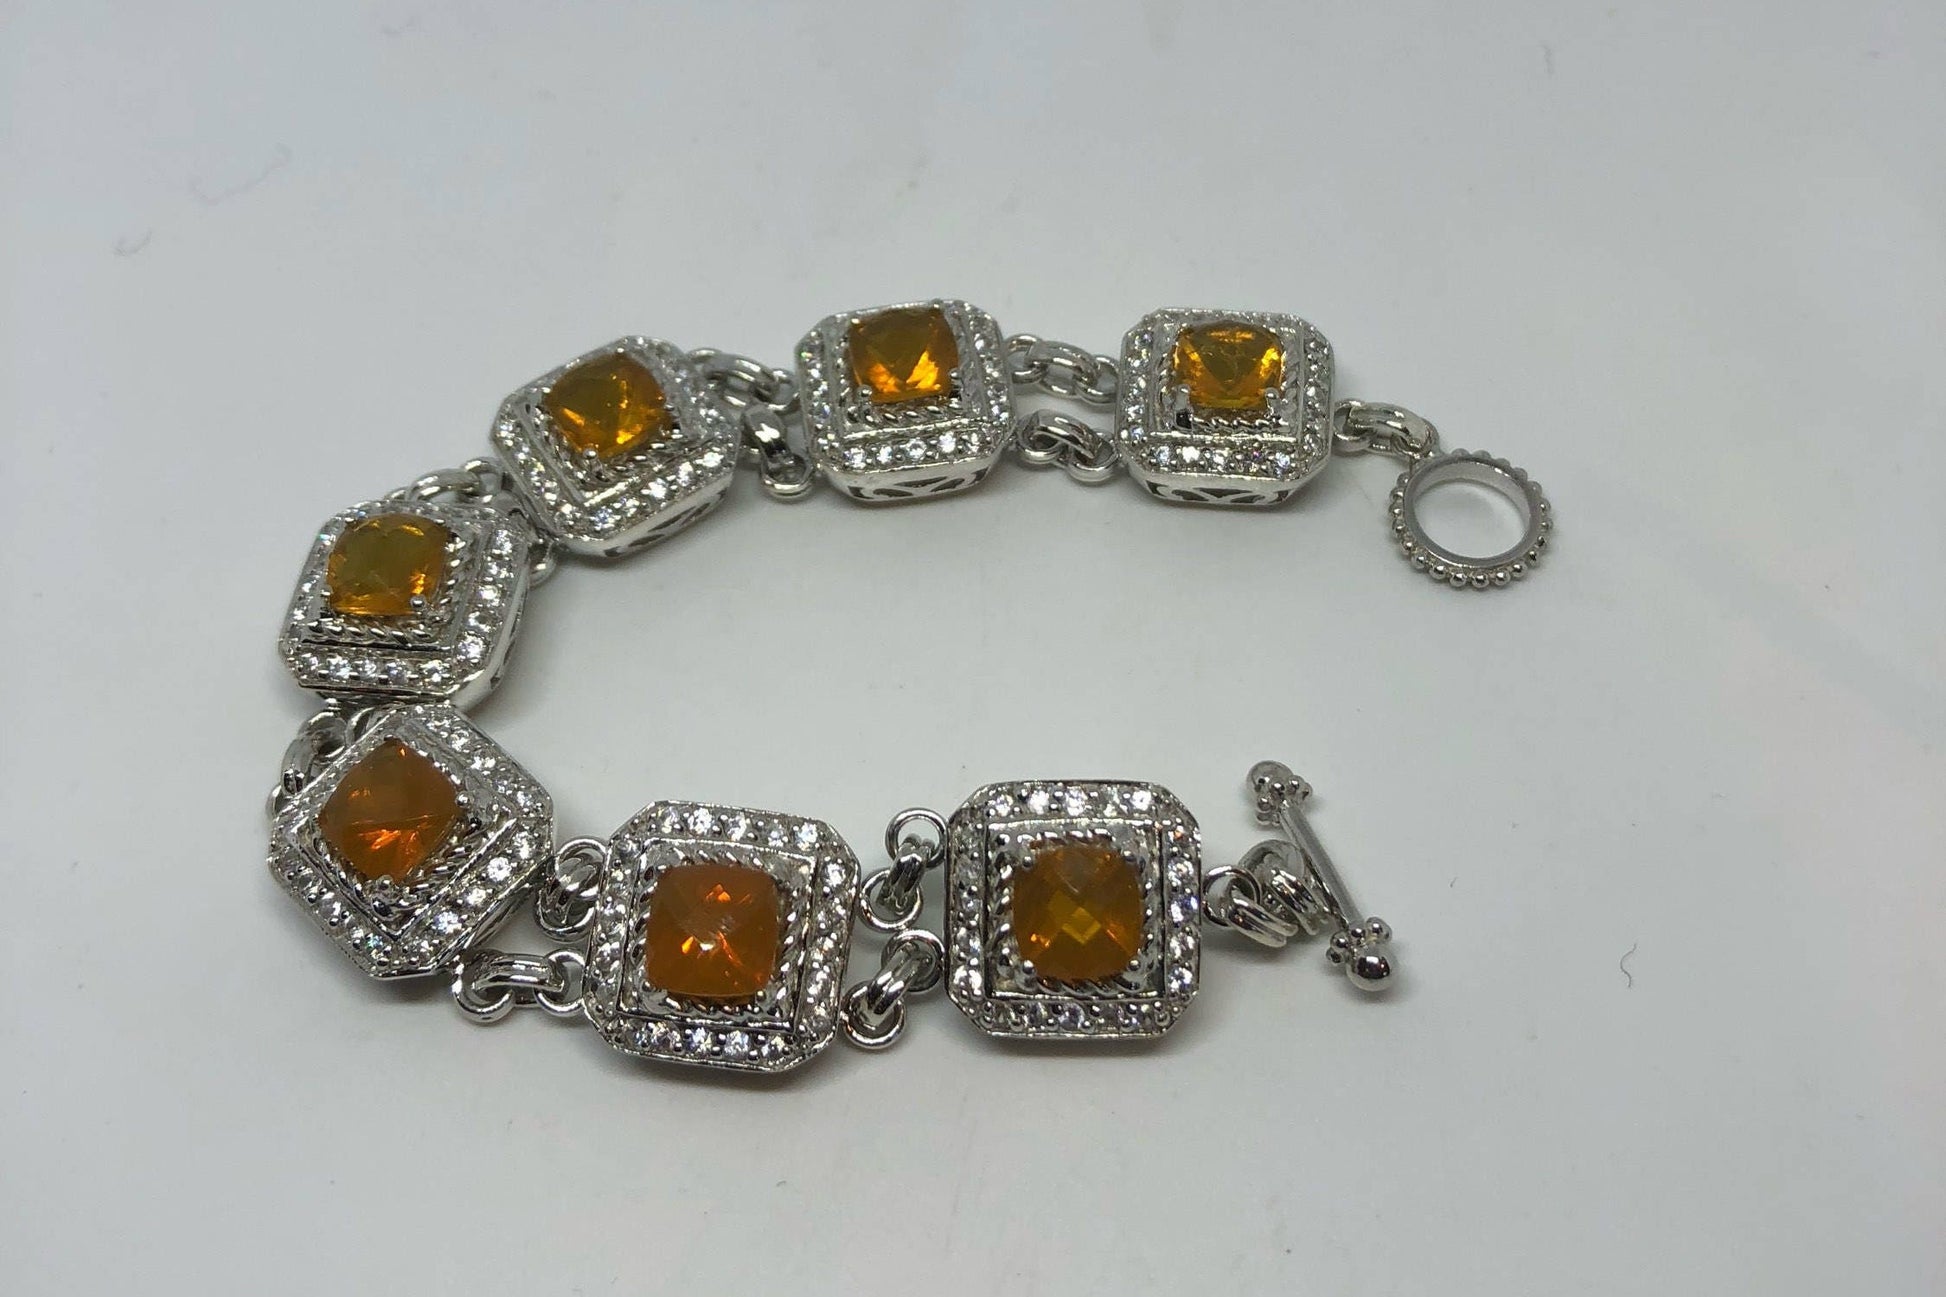 Vintage Orange Fire Opal Bracelet 925 Sterling Silver